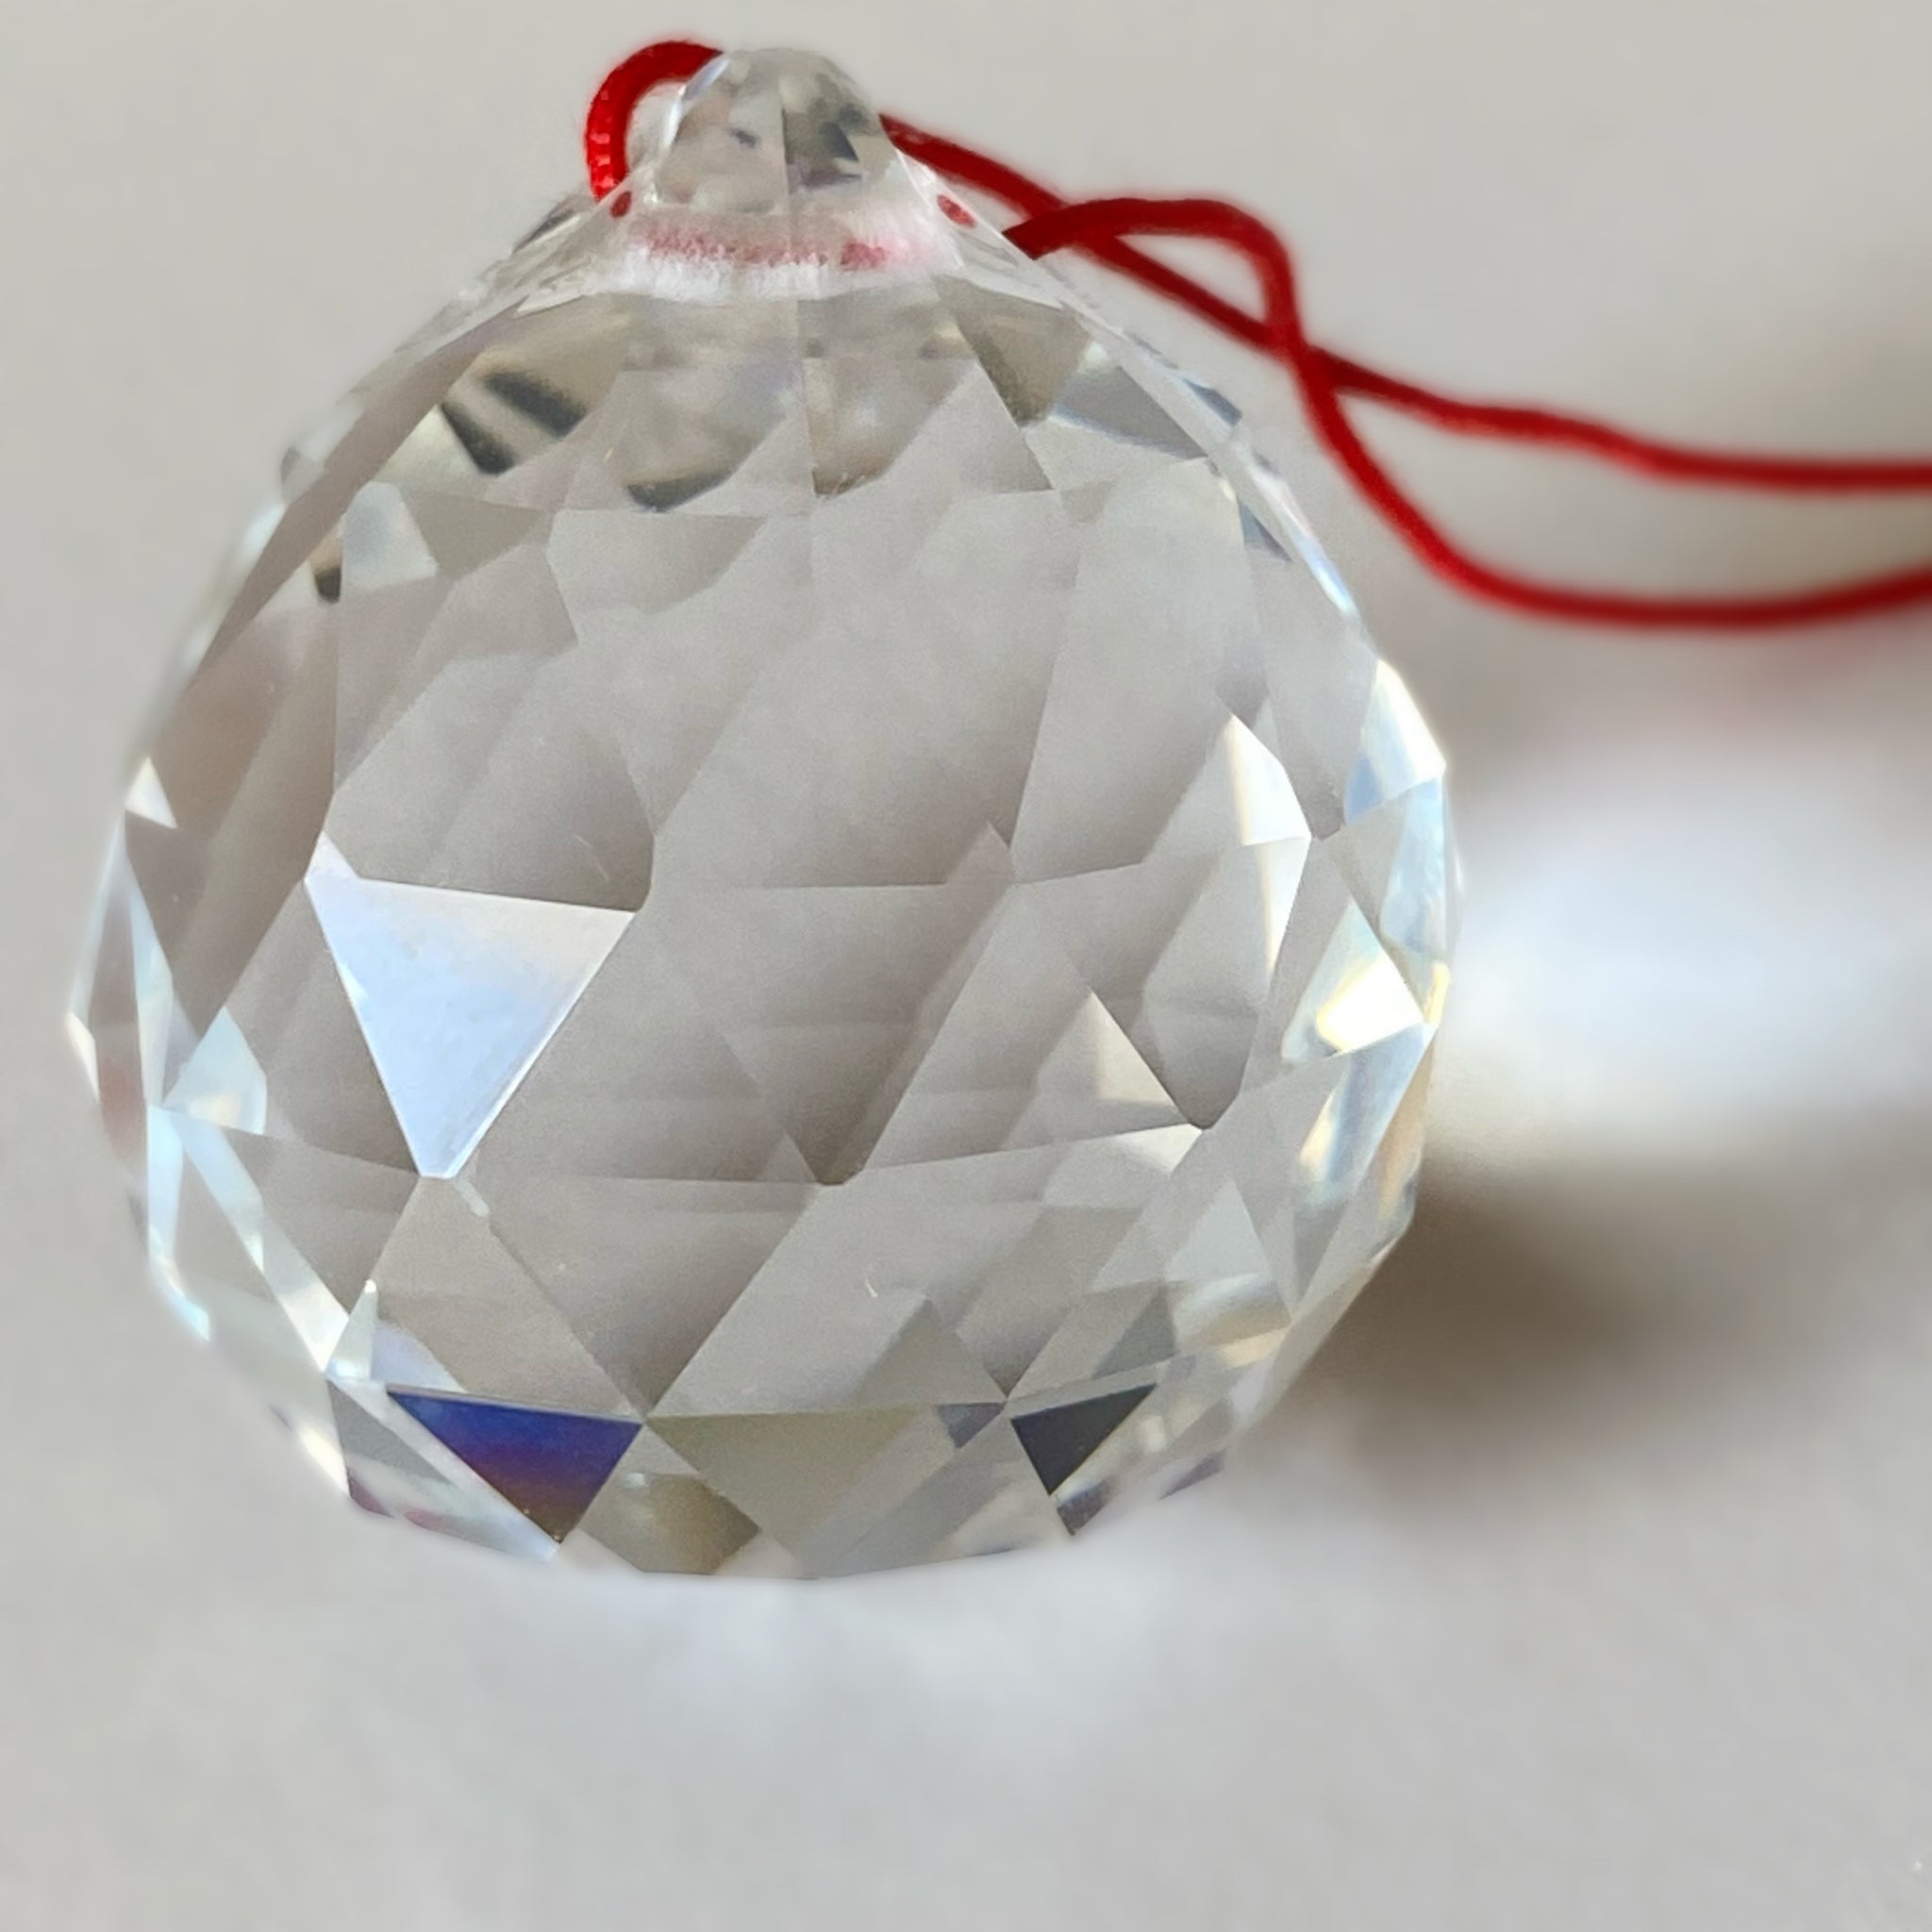 Bola de Cristal Facetada BLANCA - TRANSPARENTE Feng Shui para la Zona de la Riqueza